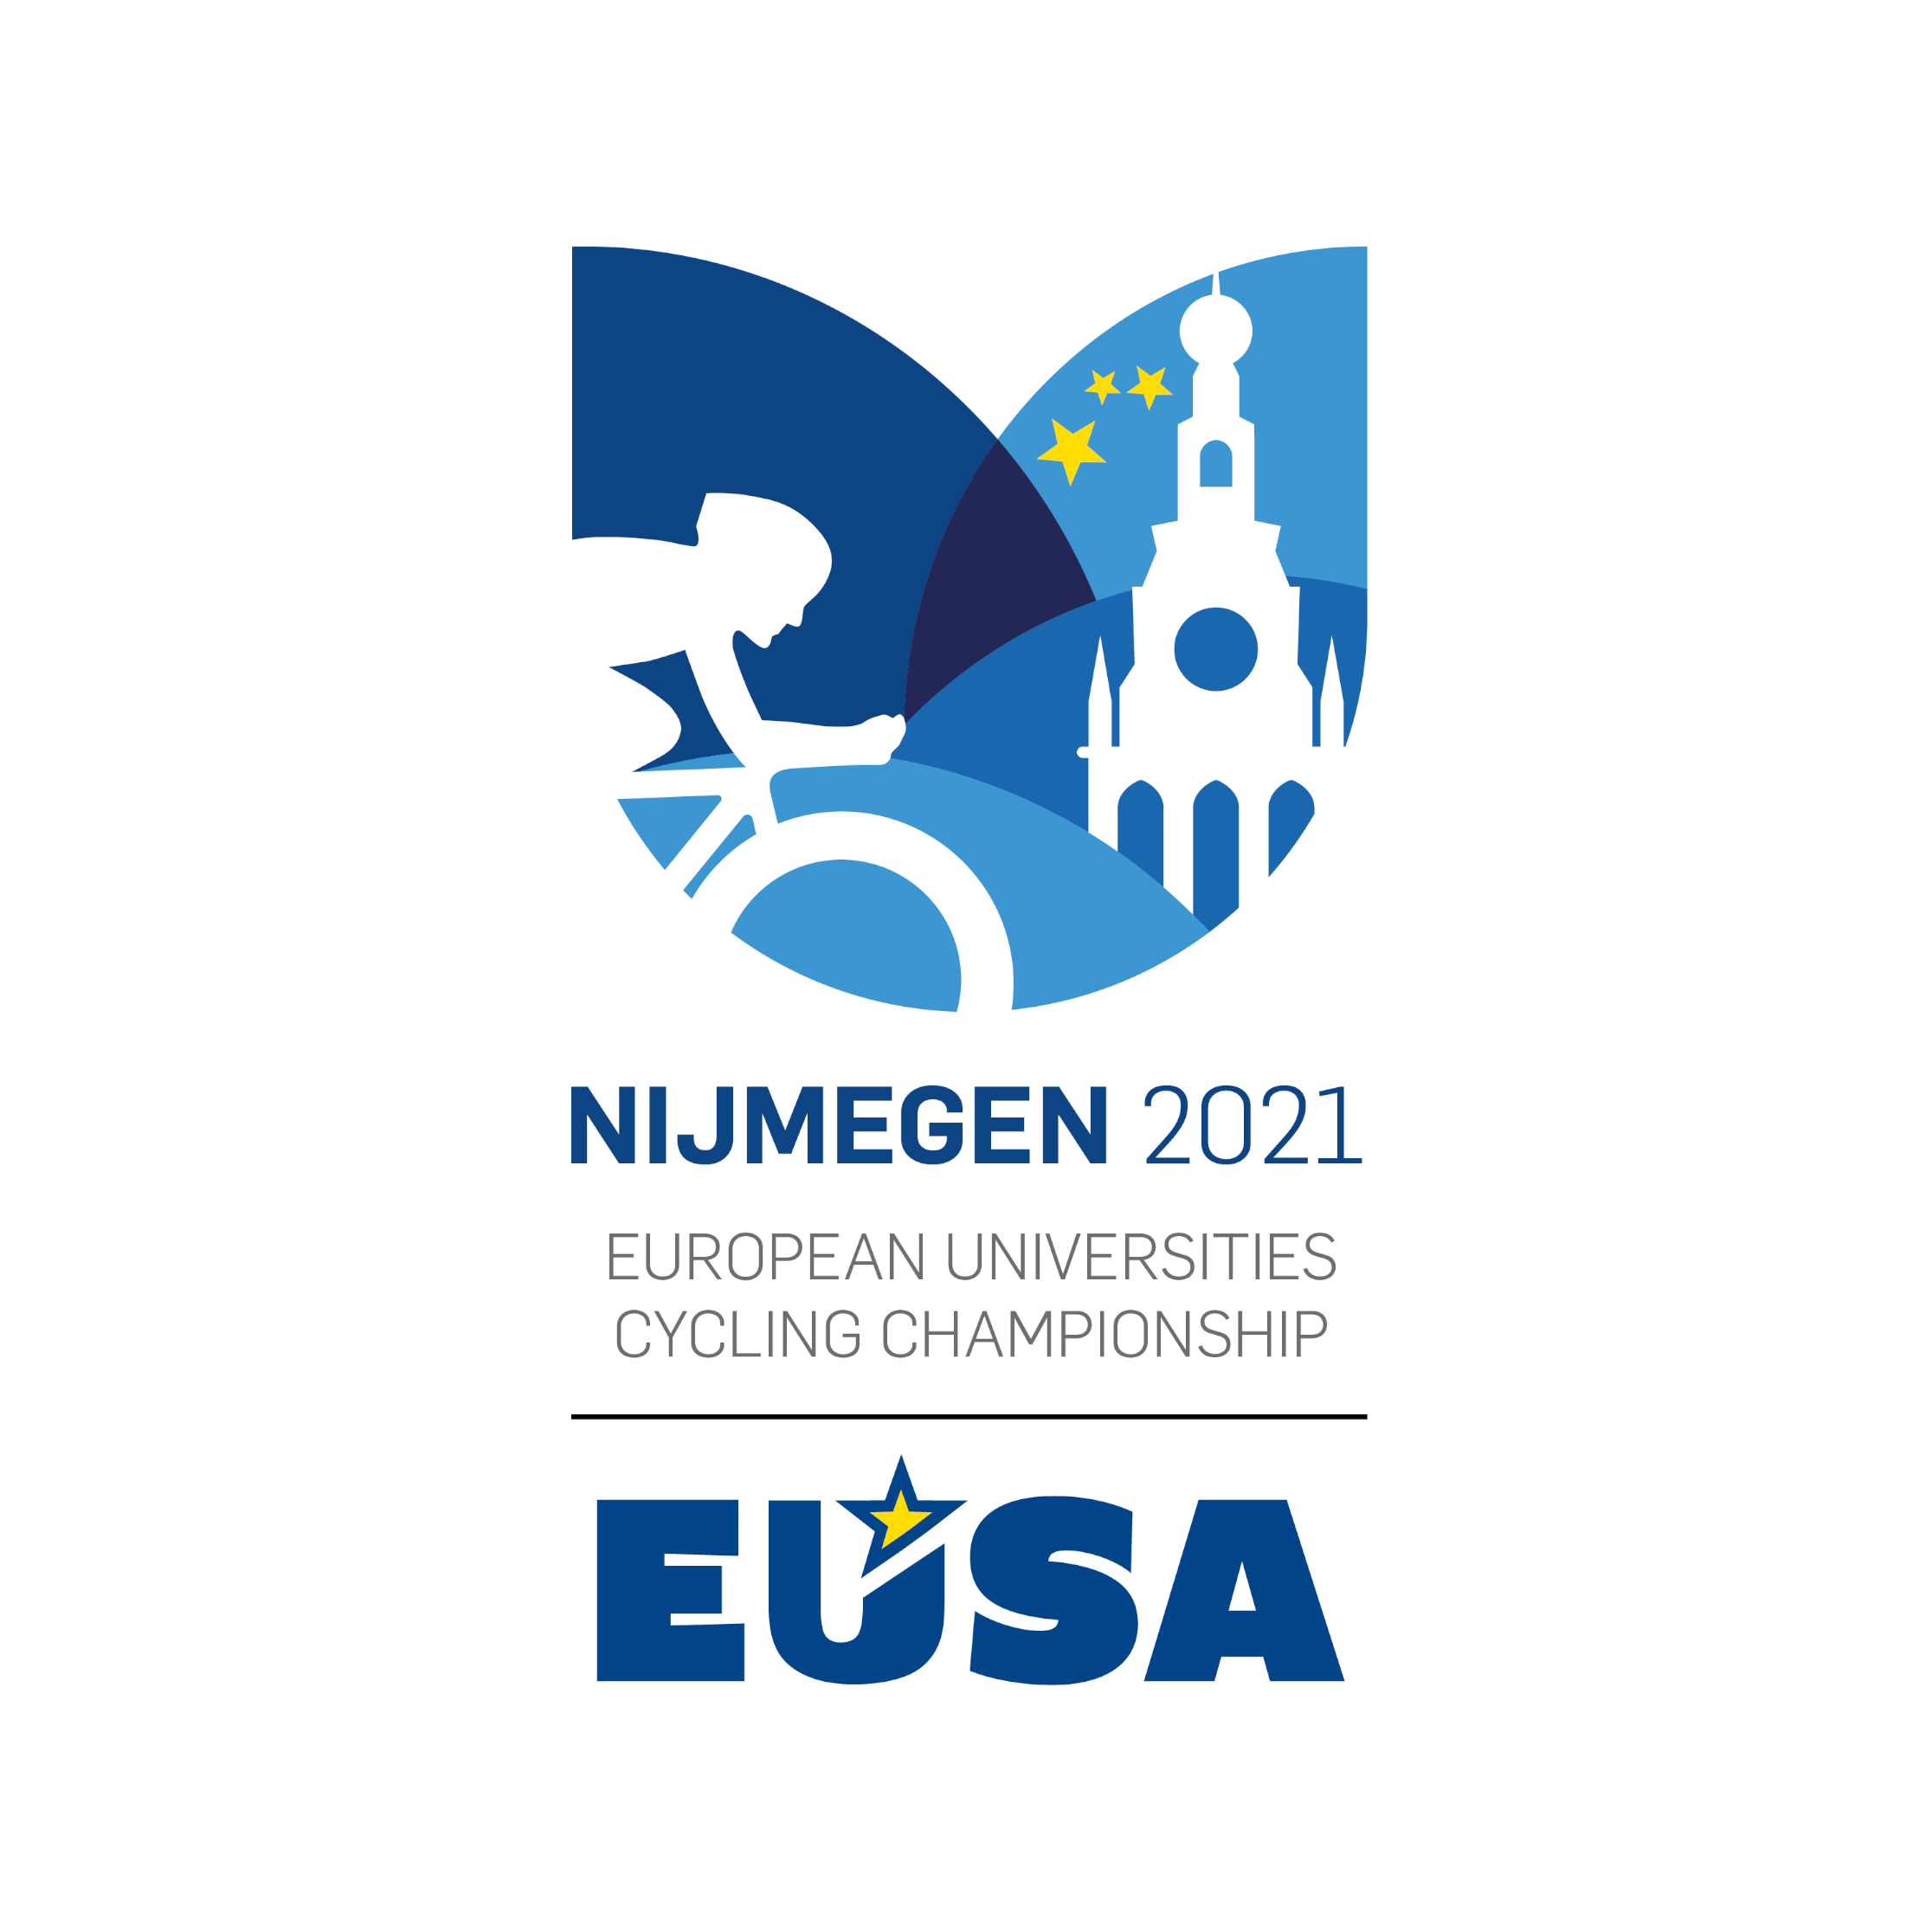 Nijmegen 2021 - European Universities Cycling Championship